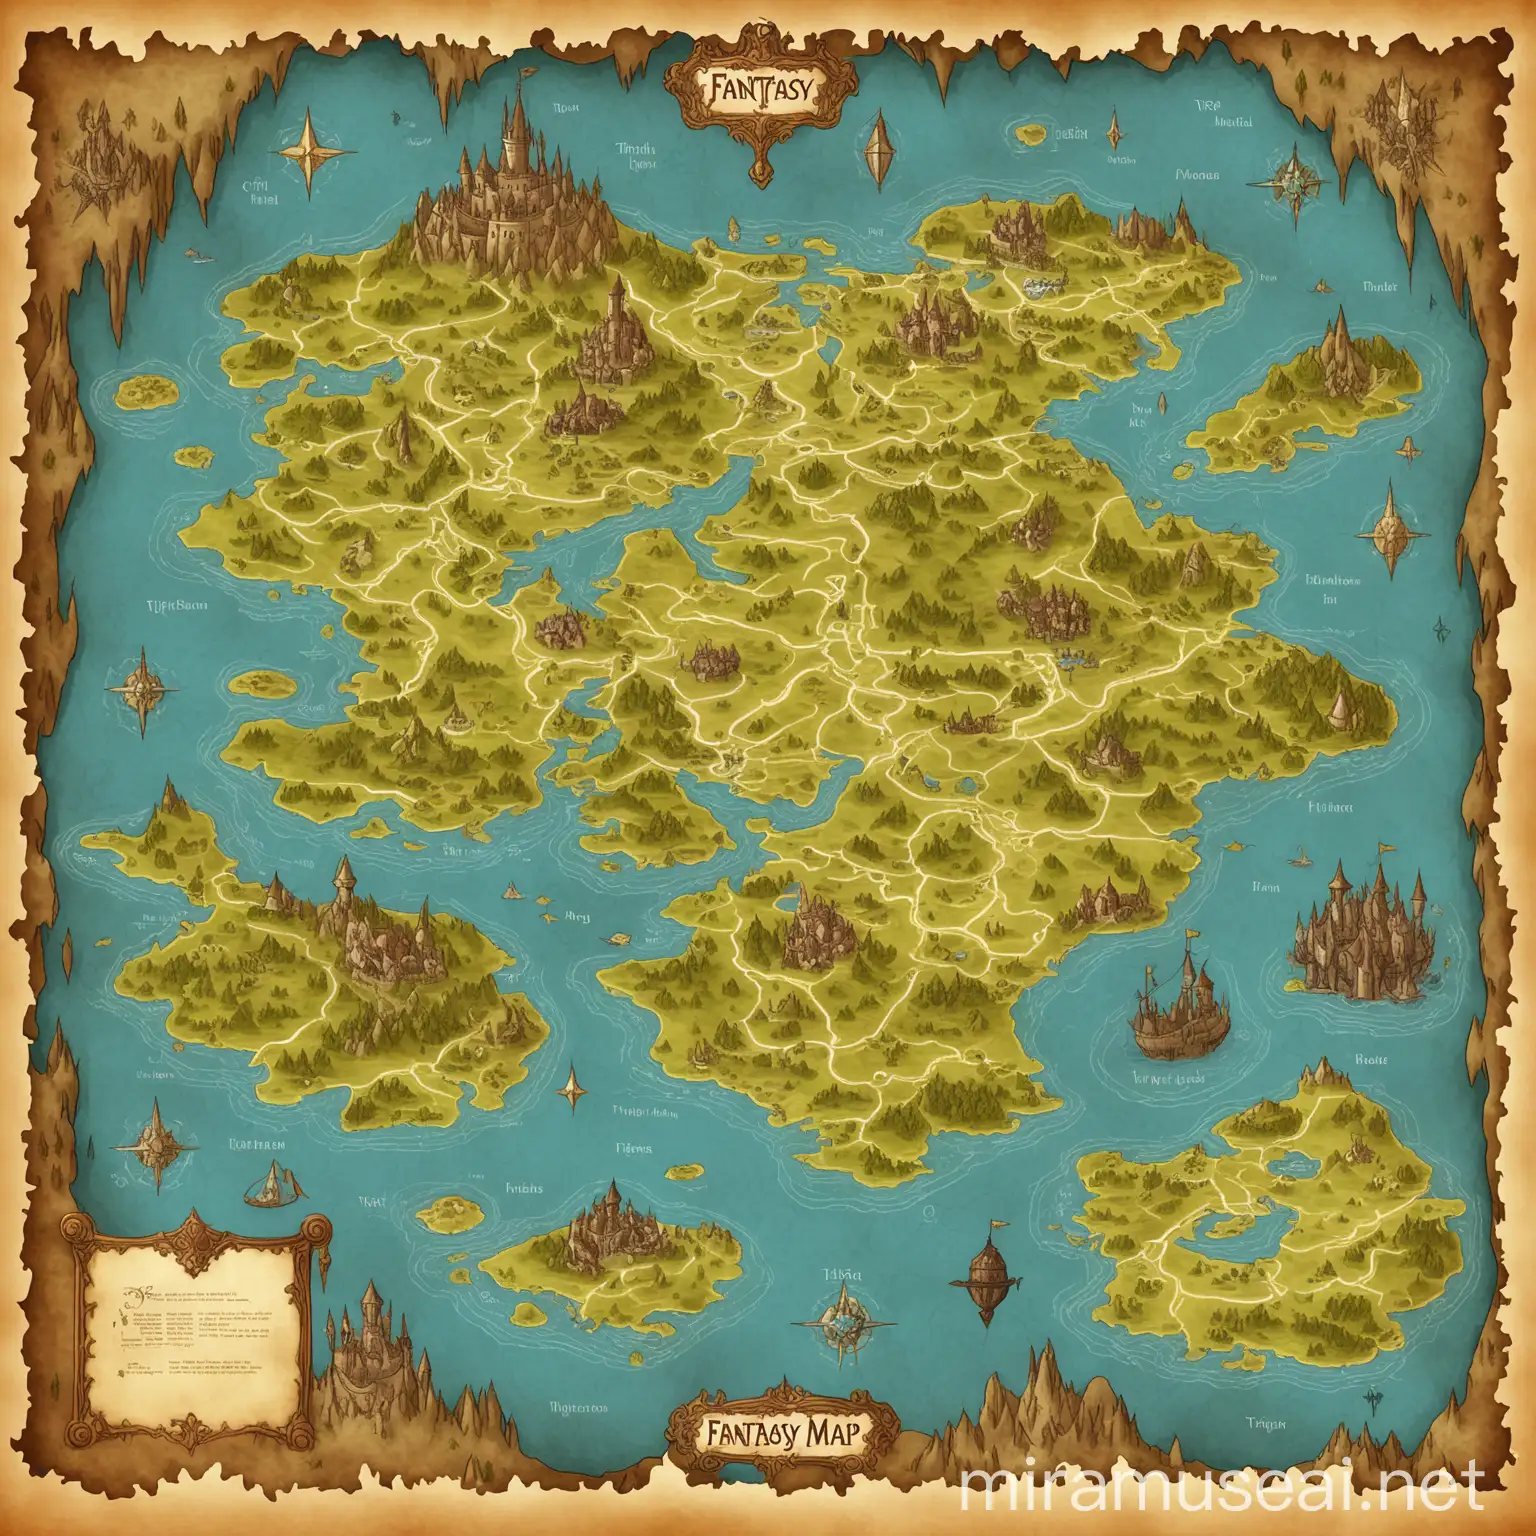 Fantasy map like the image